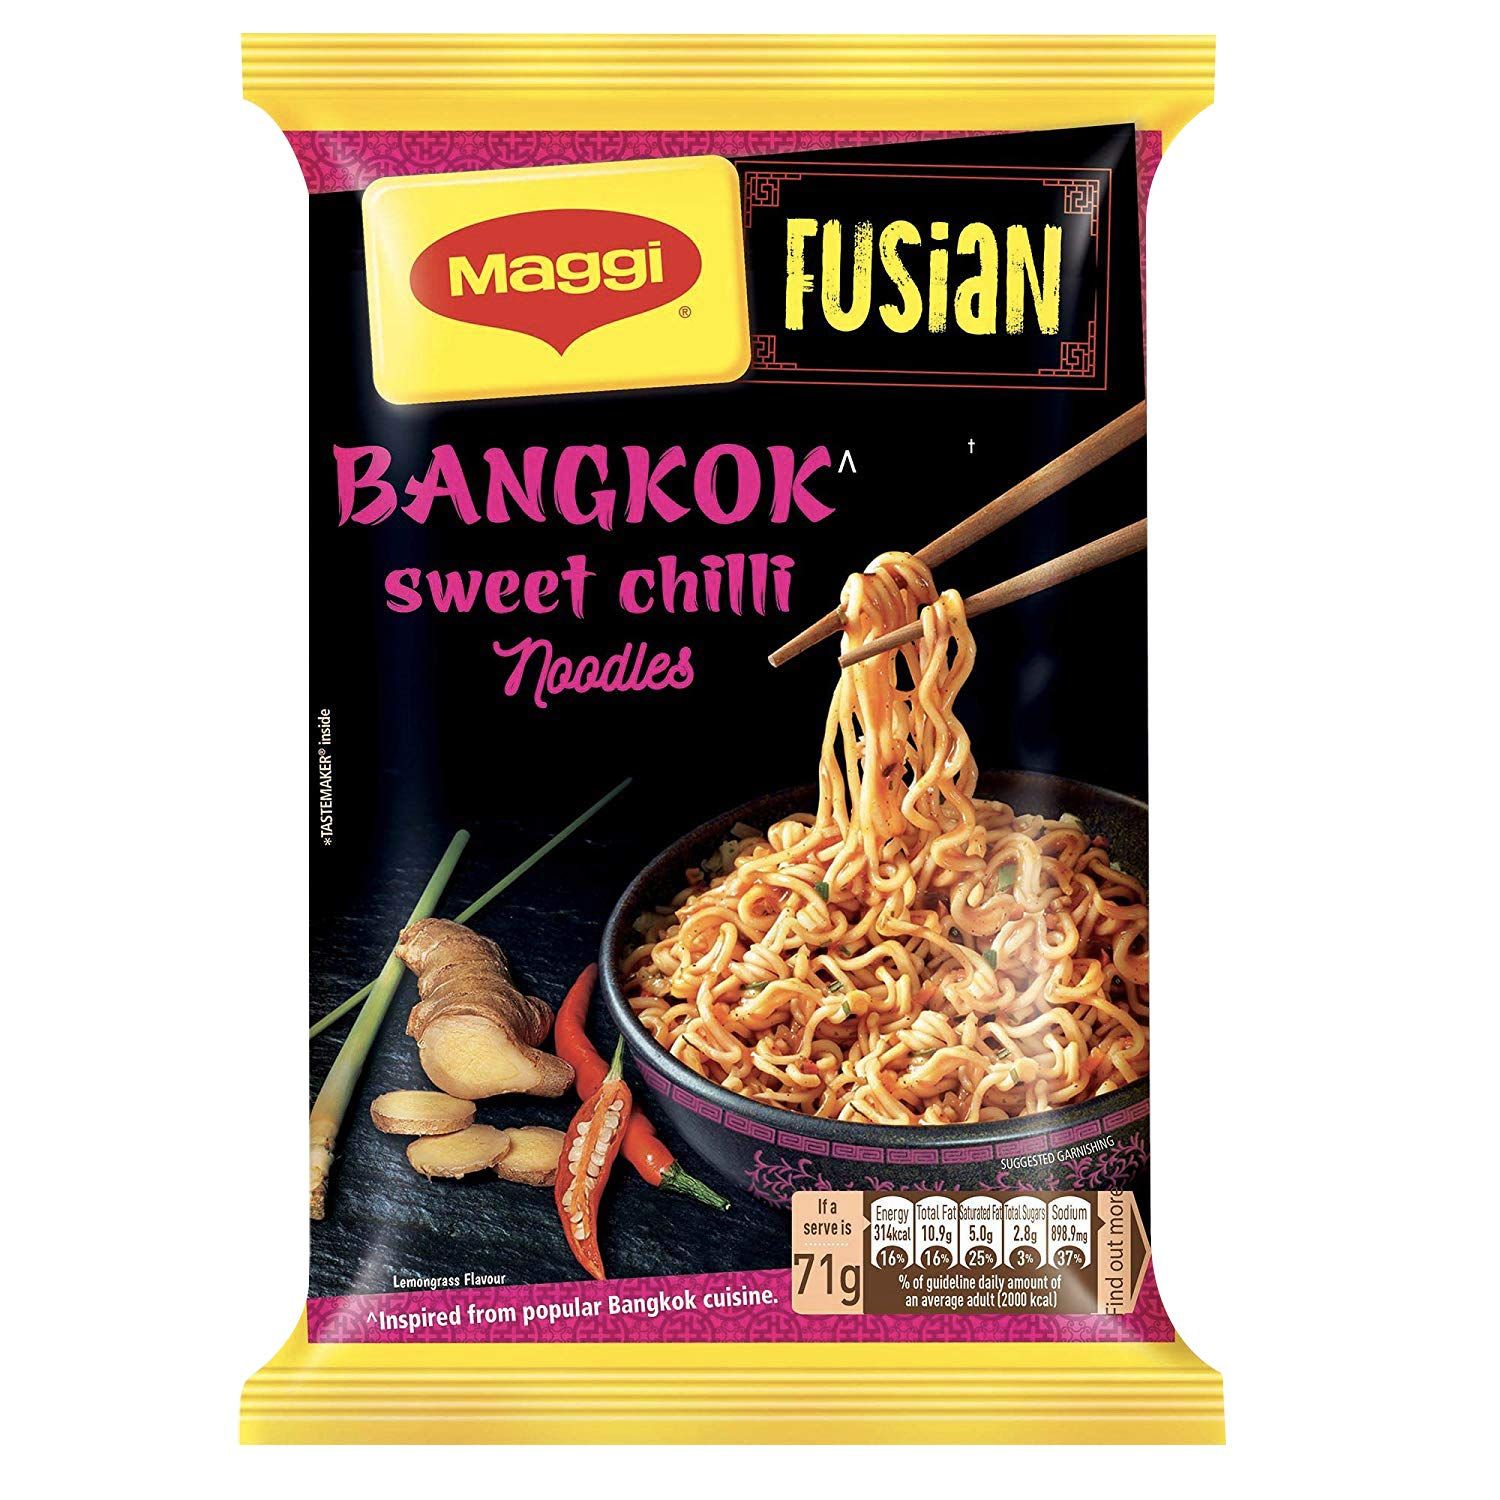 Maggi Fusion Bangkok Sweet Chilli Noodles Image